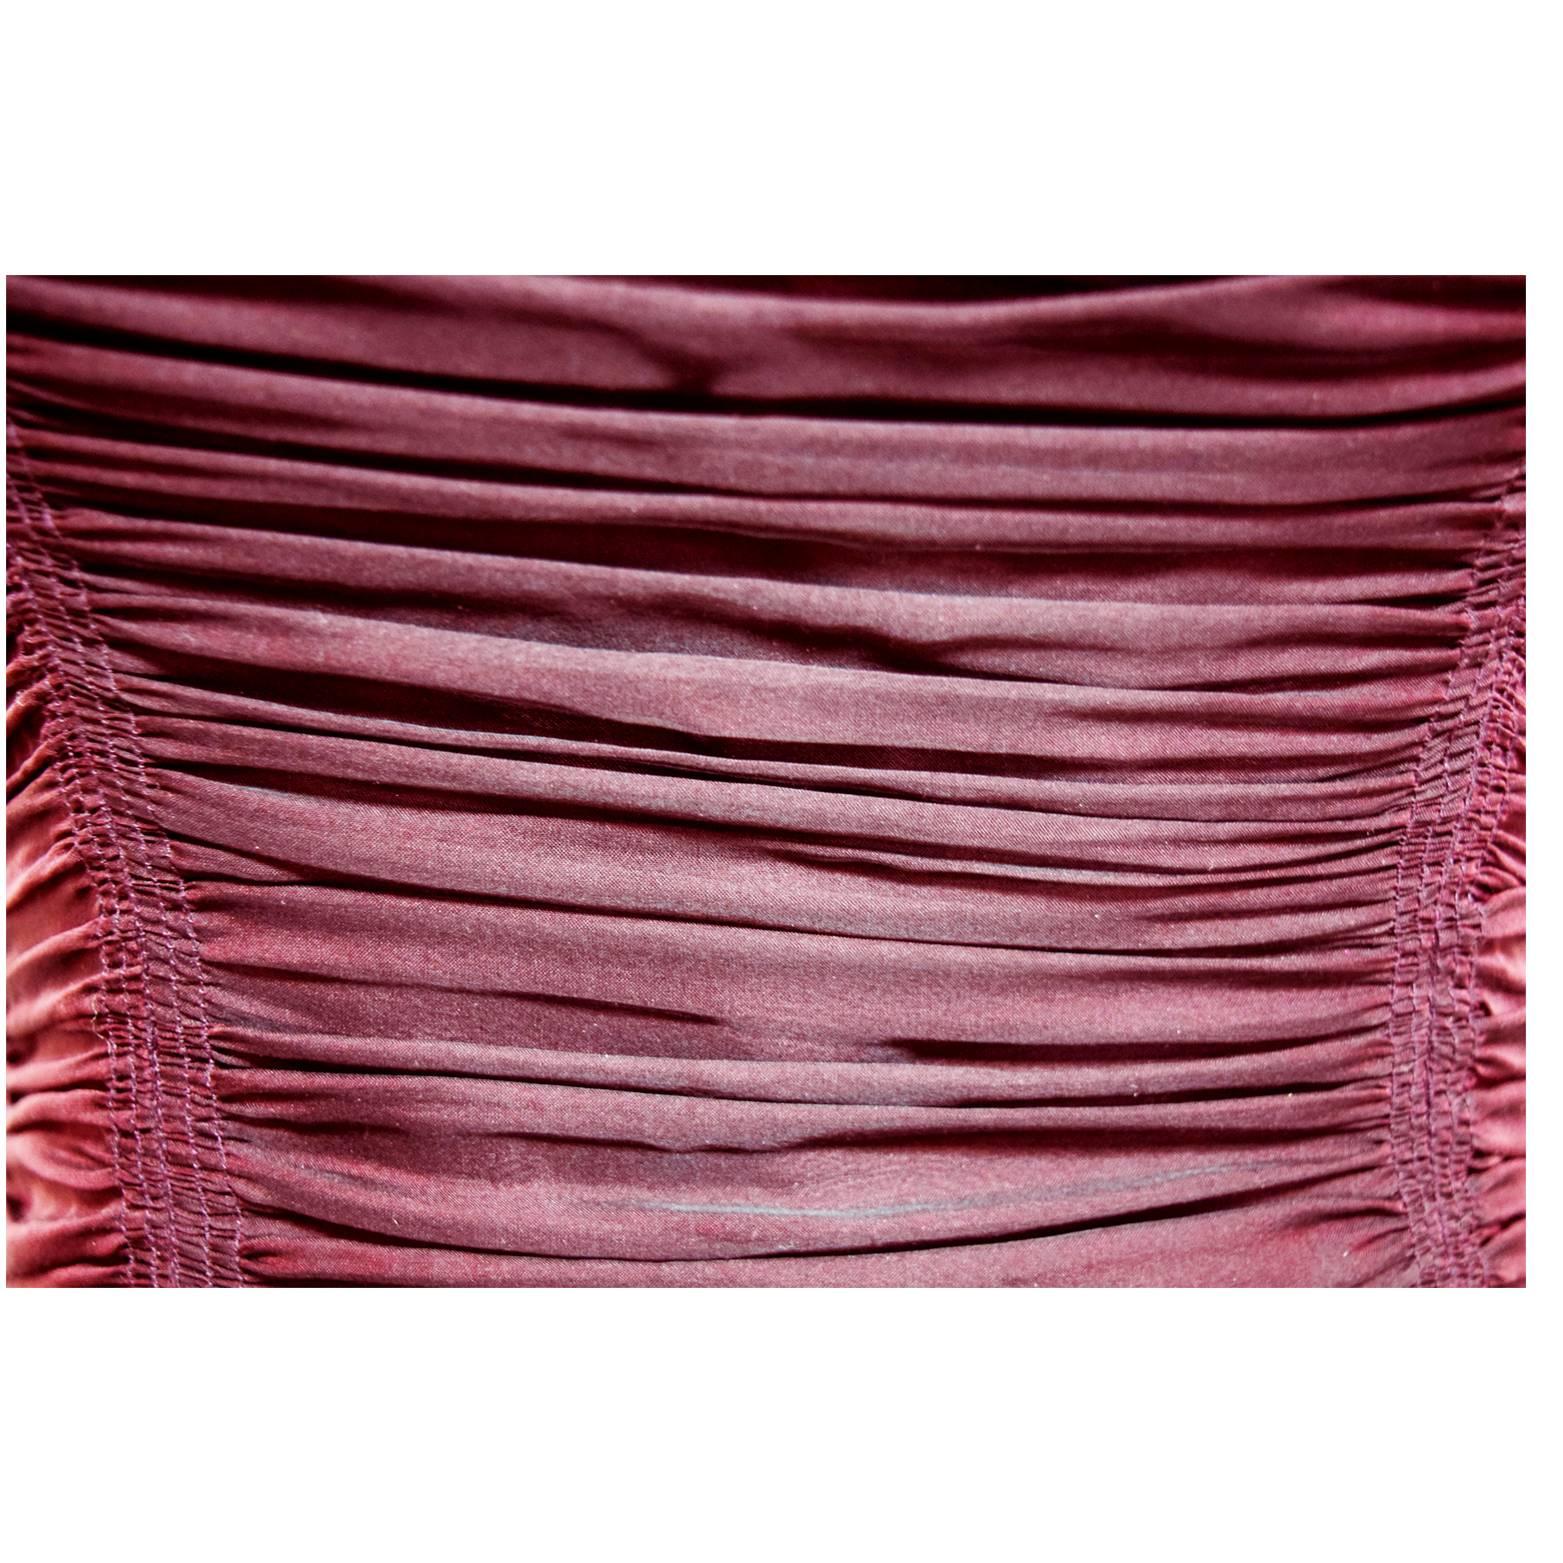 Lela Rose Fringe Skirted Tube Dress  In Excellent Condition For Sale In Henrico, VA